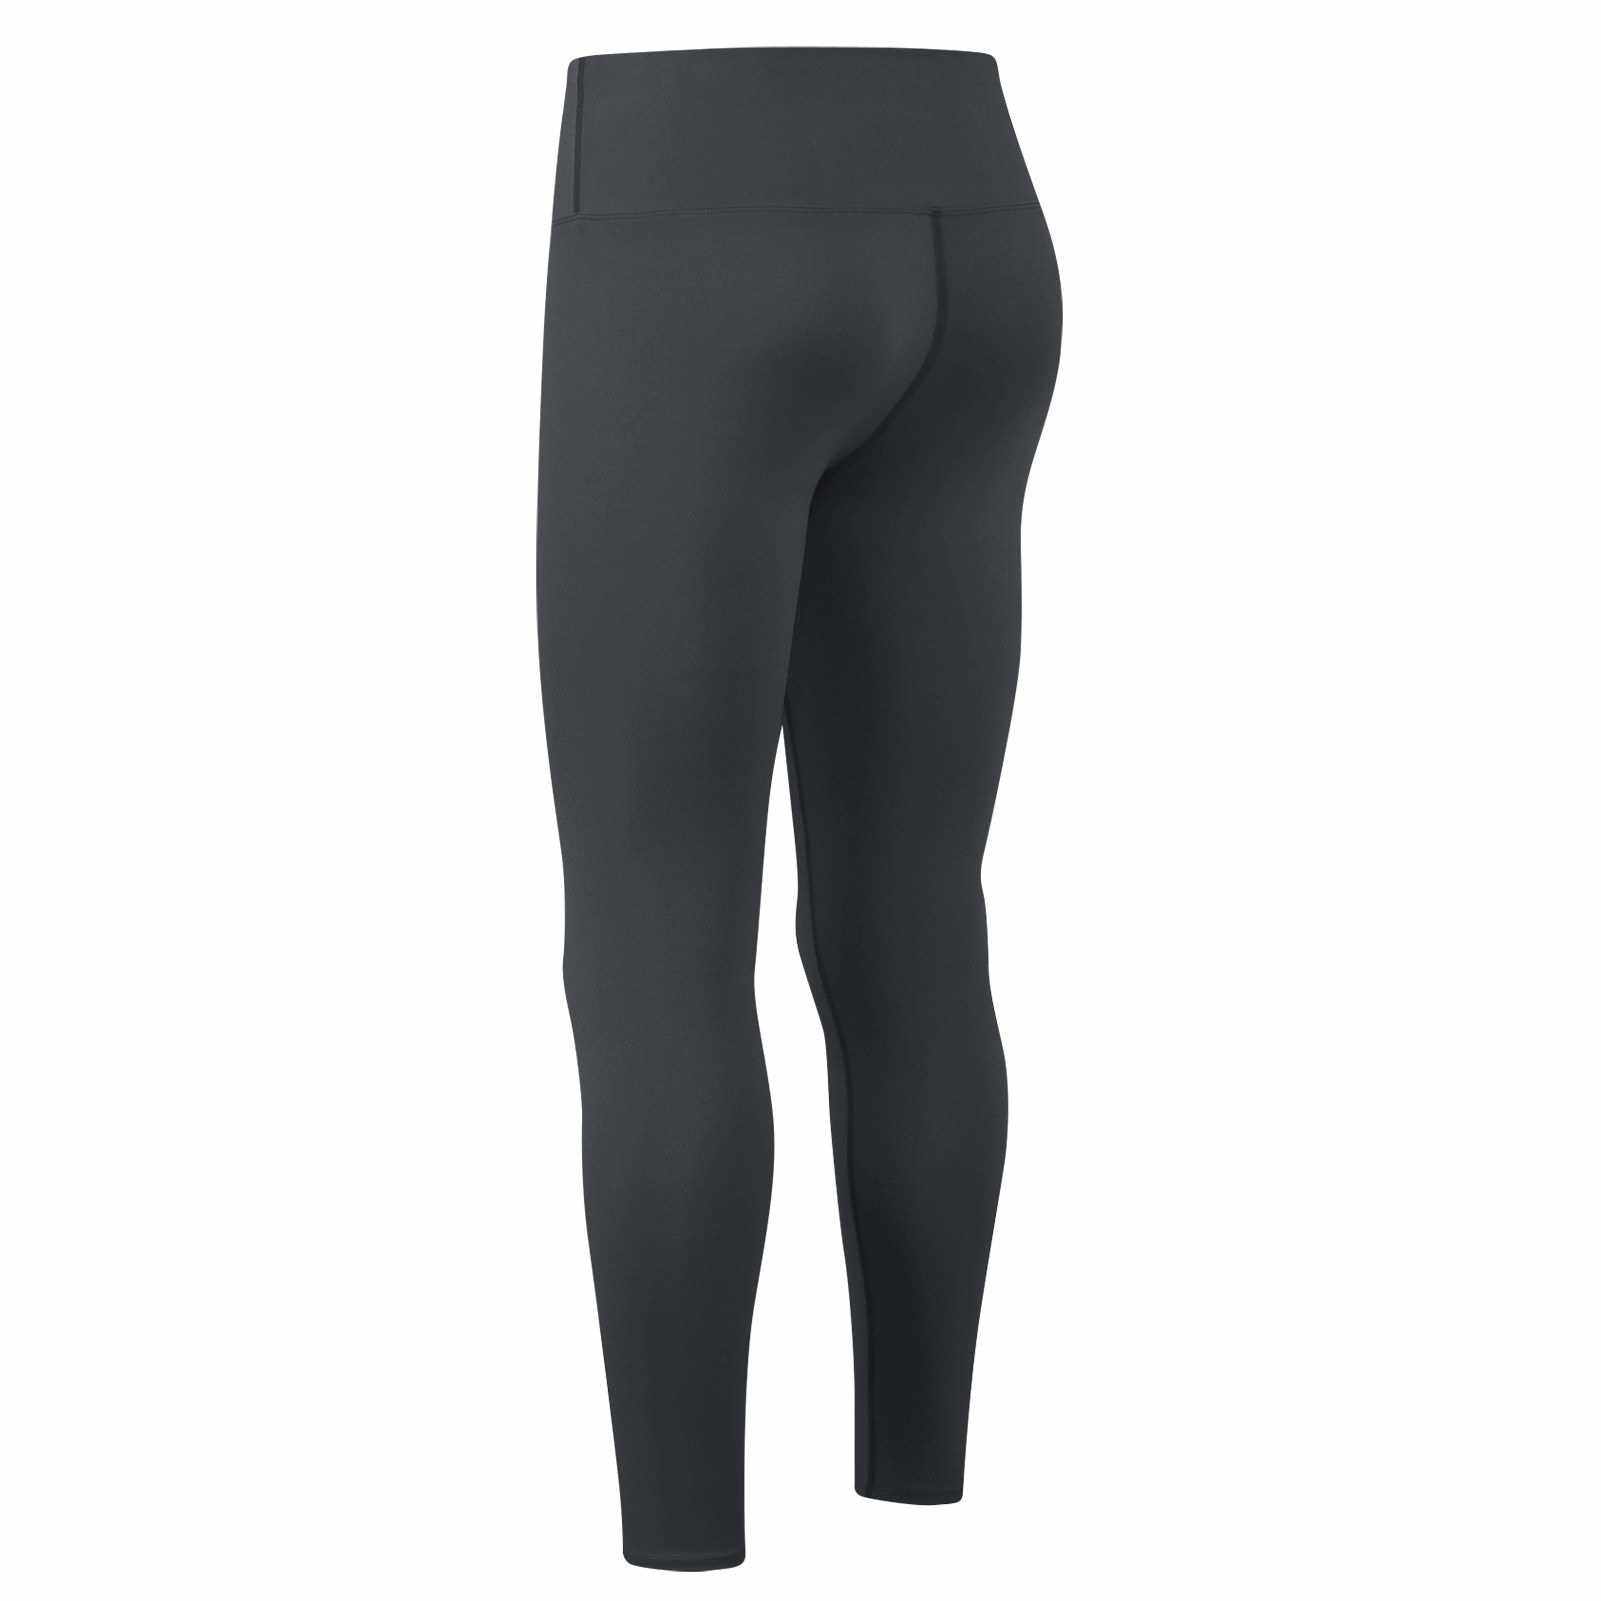 Hot Sale] Women Yoga Leggings Quick Dry Non-See Through High Waist Push Up  Sport Workout Pants (Dark Gray)